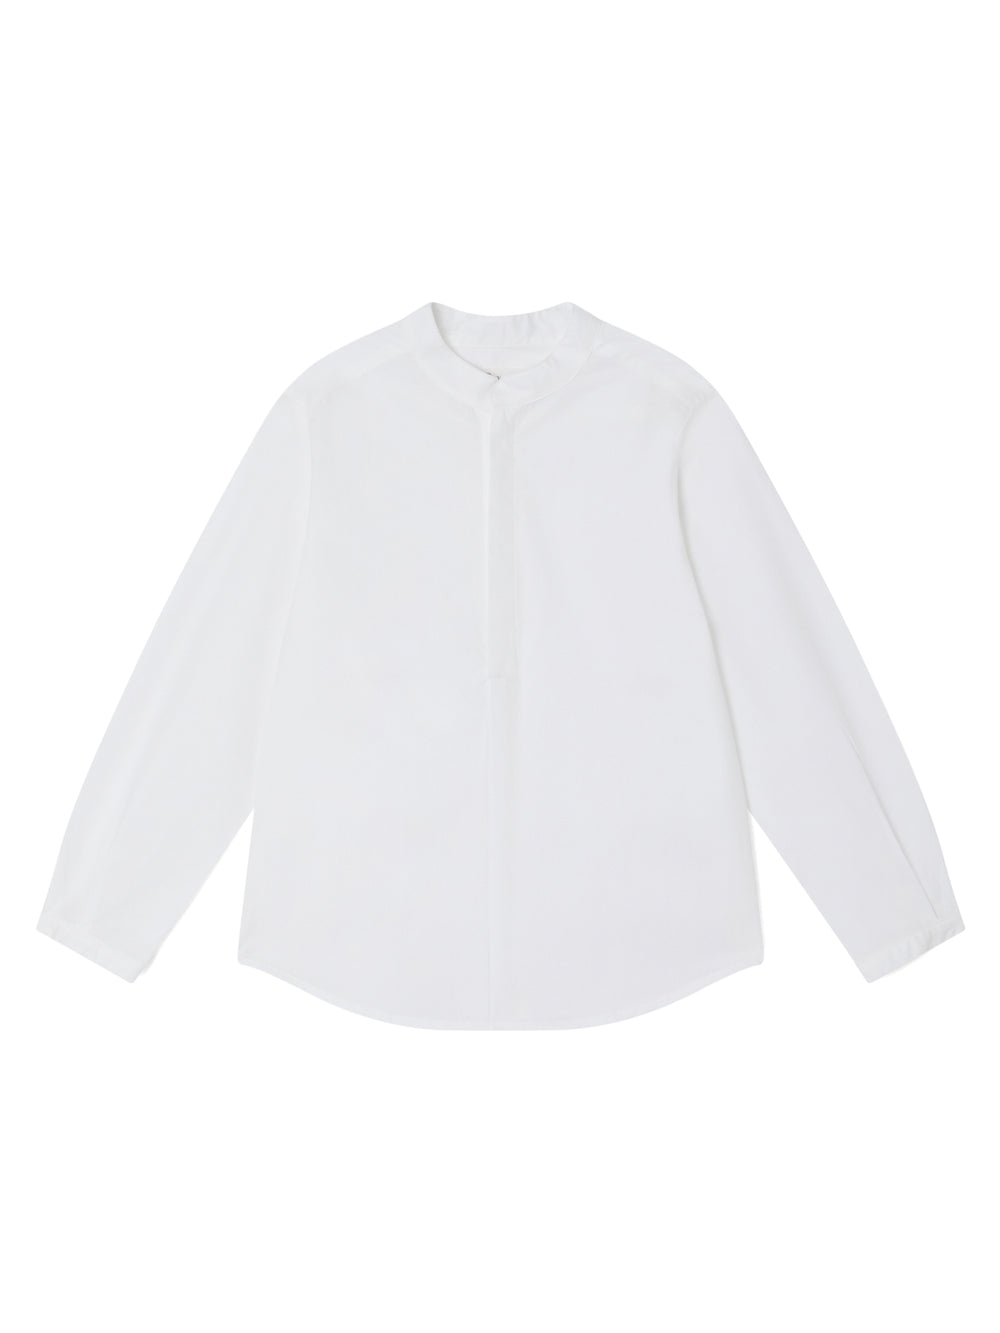 Shirt with Mandarin Collar for Boys white